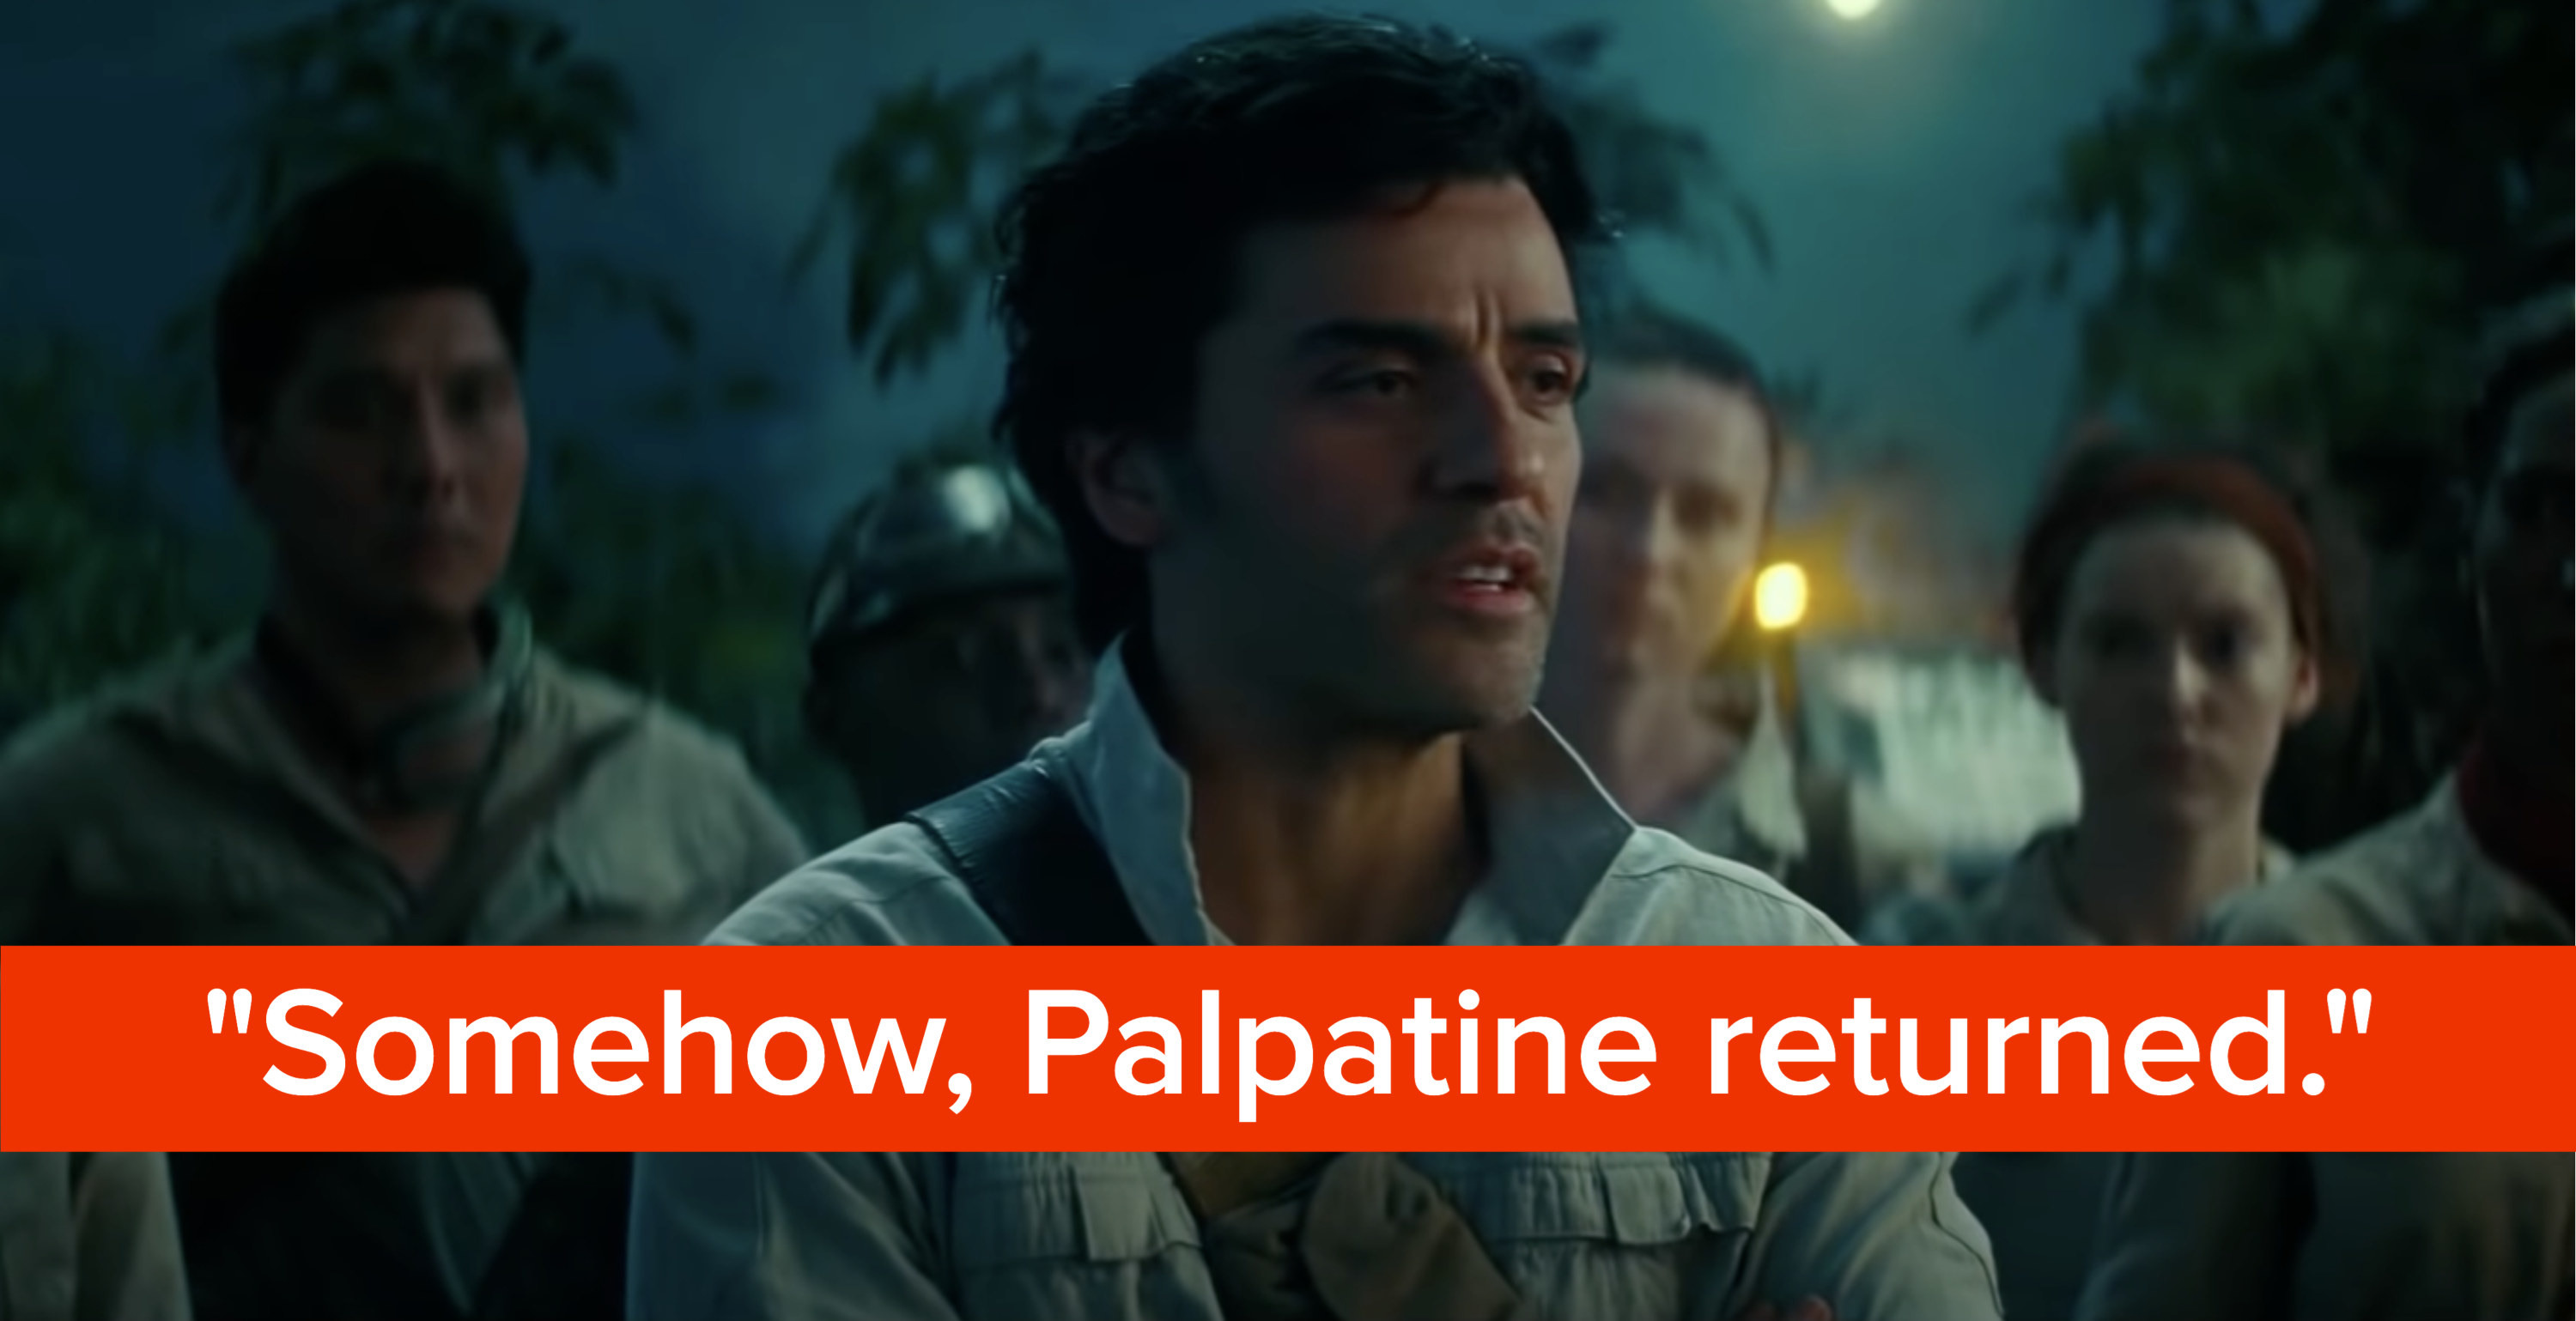 Poe Dameron says, &quot;Somehow, Palpatine returned&quot;